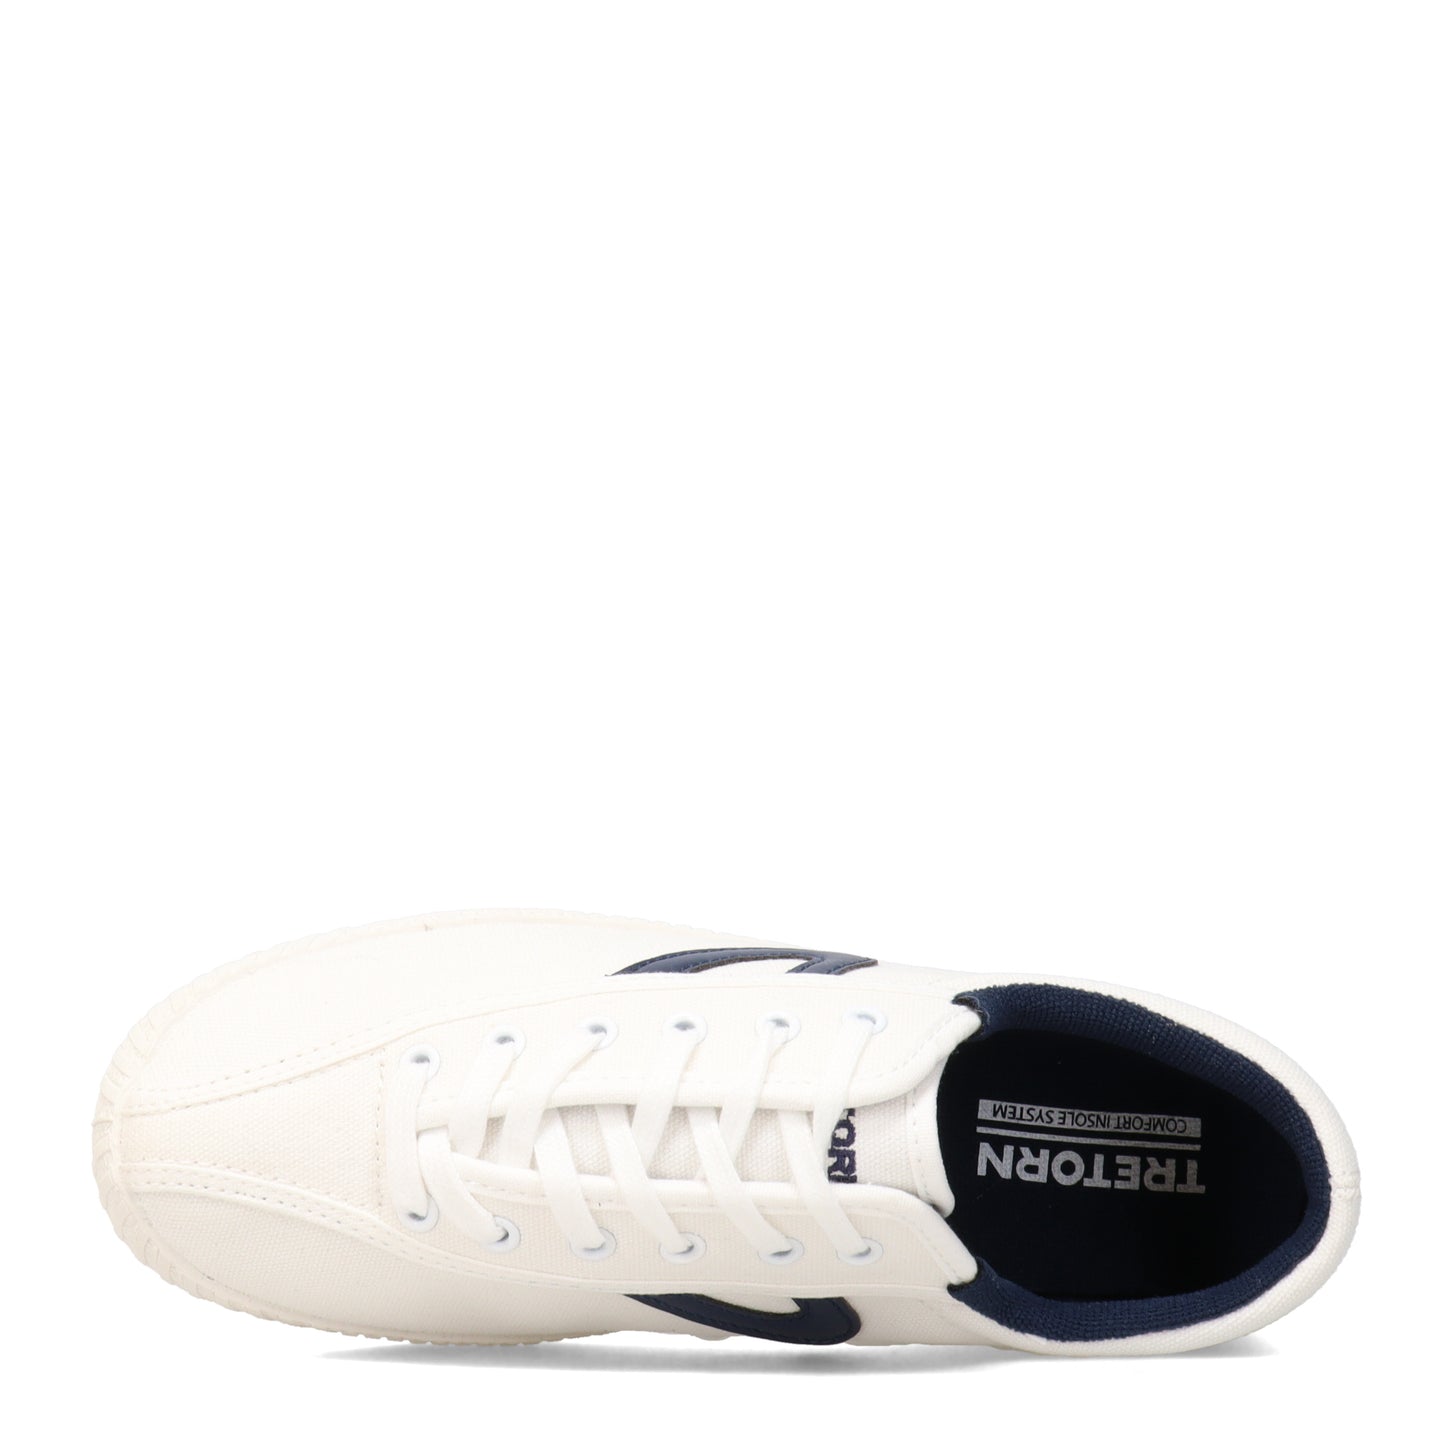 Peltz Shoes  Women's Tretorn Nylite Plus Canvas Sneaker WHITE/NAVY NYLITECA-WHTNAV